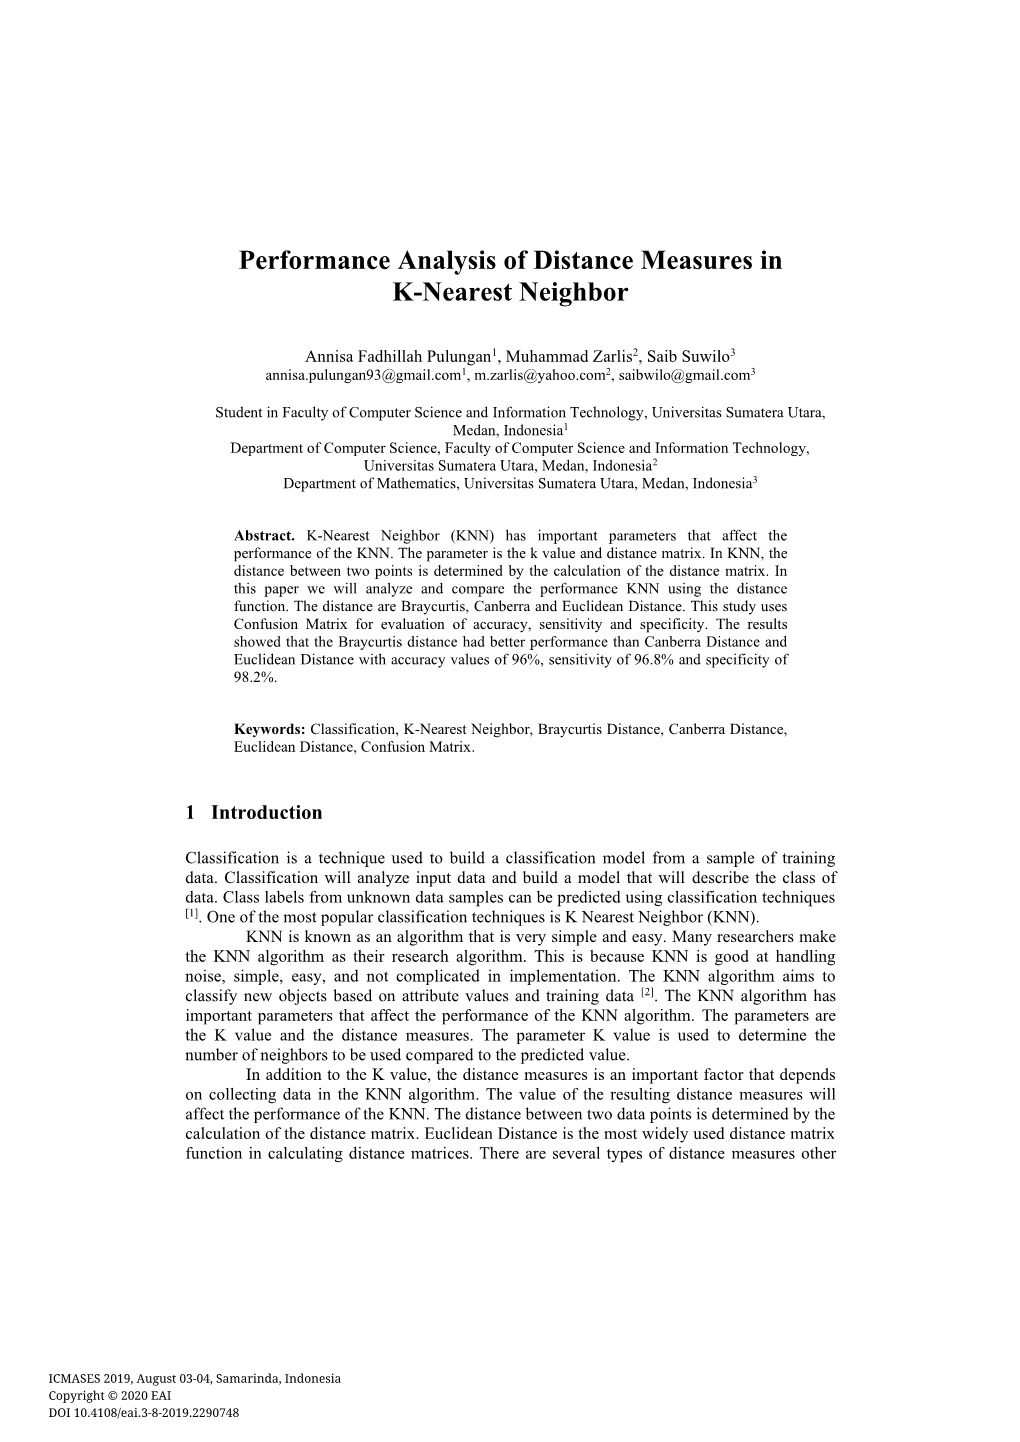 Performance Analysis of Distance Measures in K-Nearest Neighbor